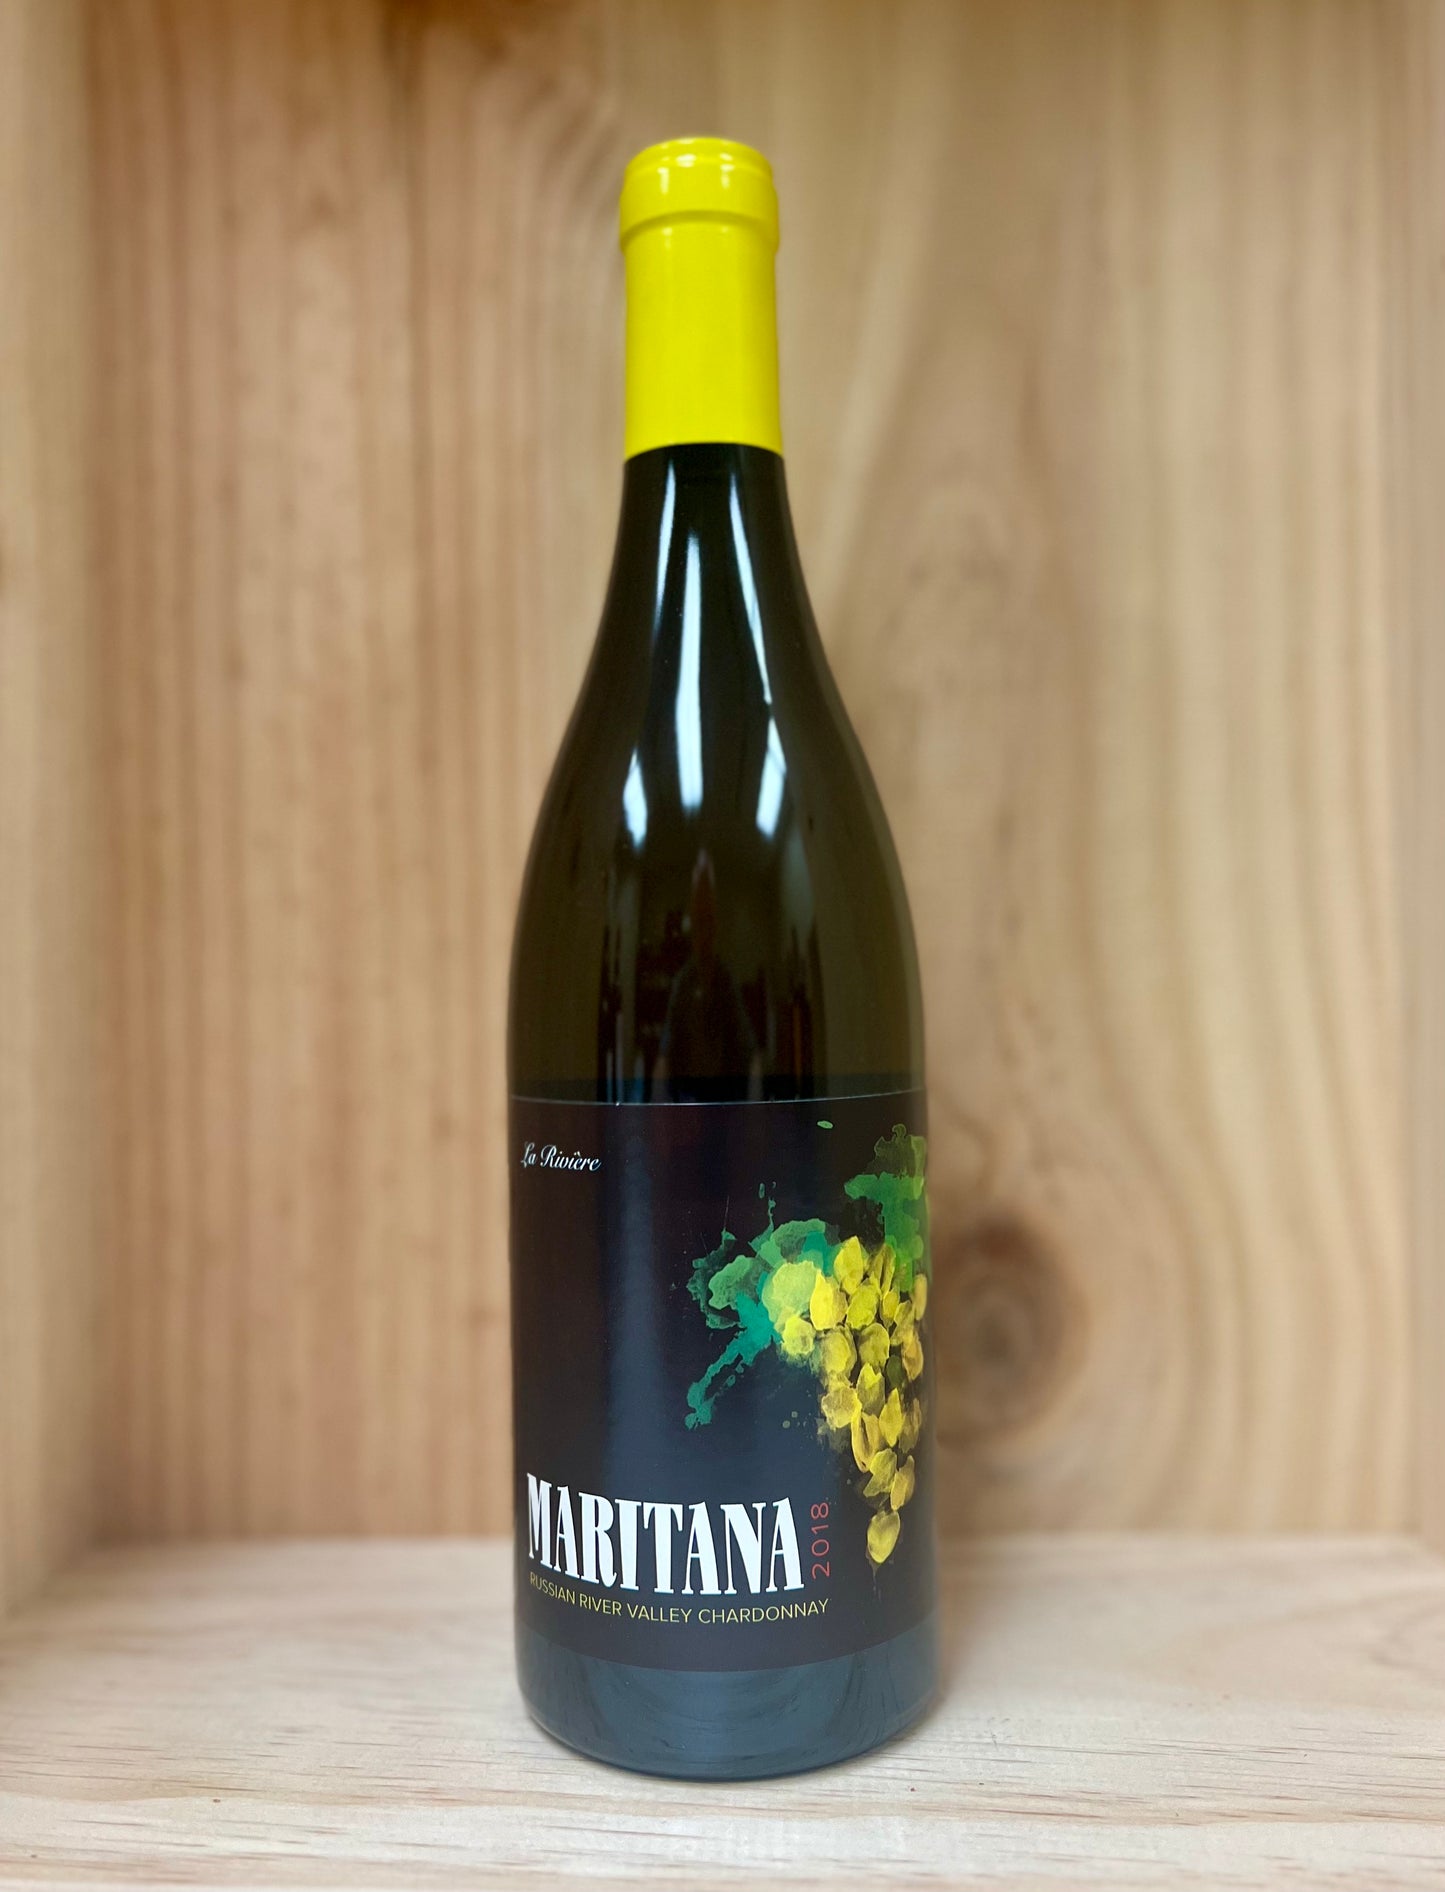 Maritana, ‘La Riviere’ Chardonnay 2019